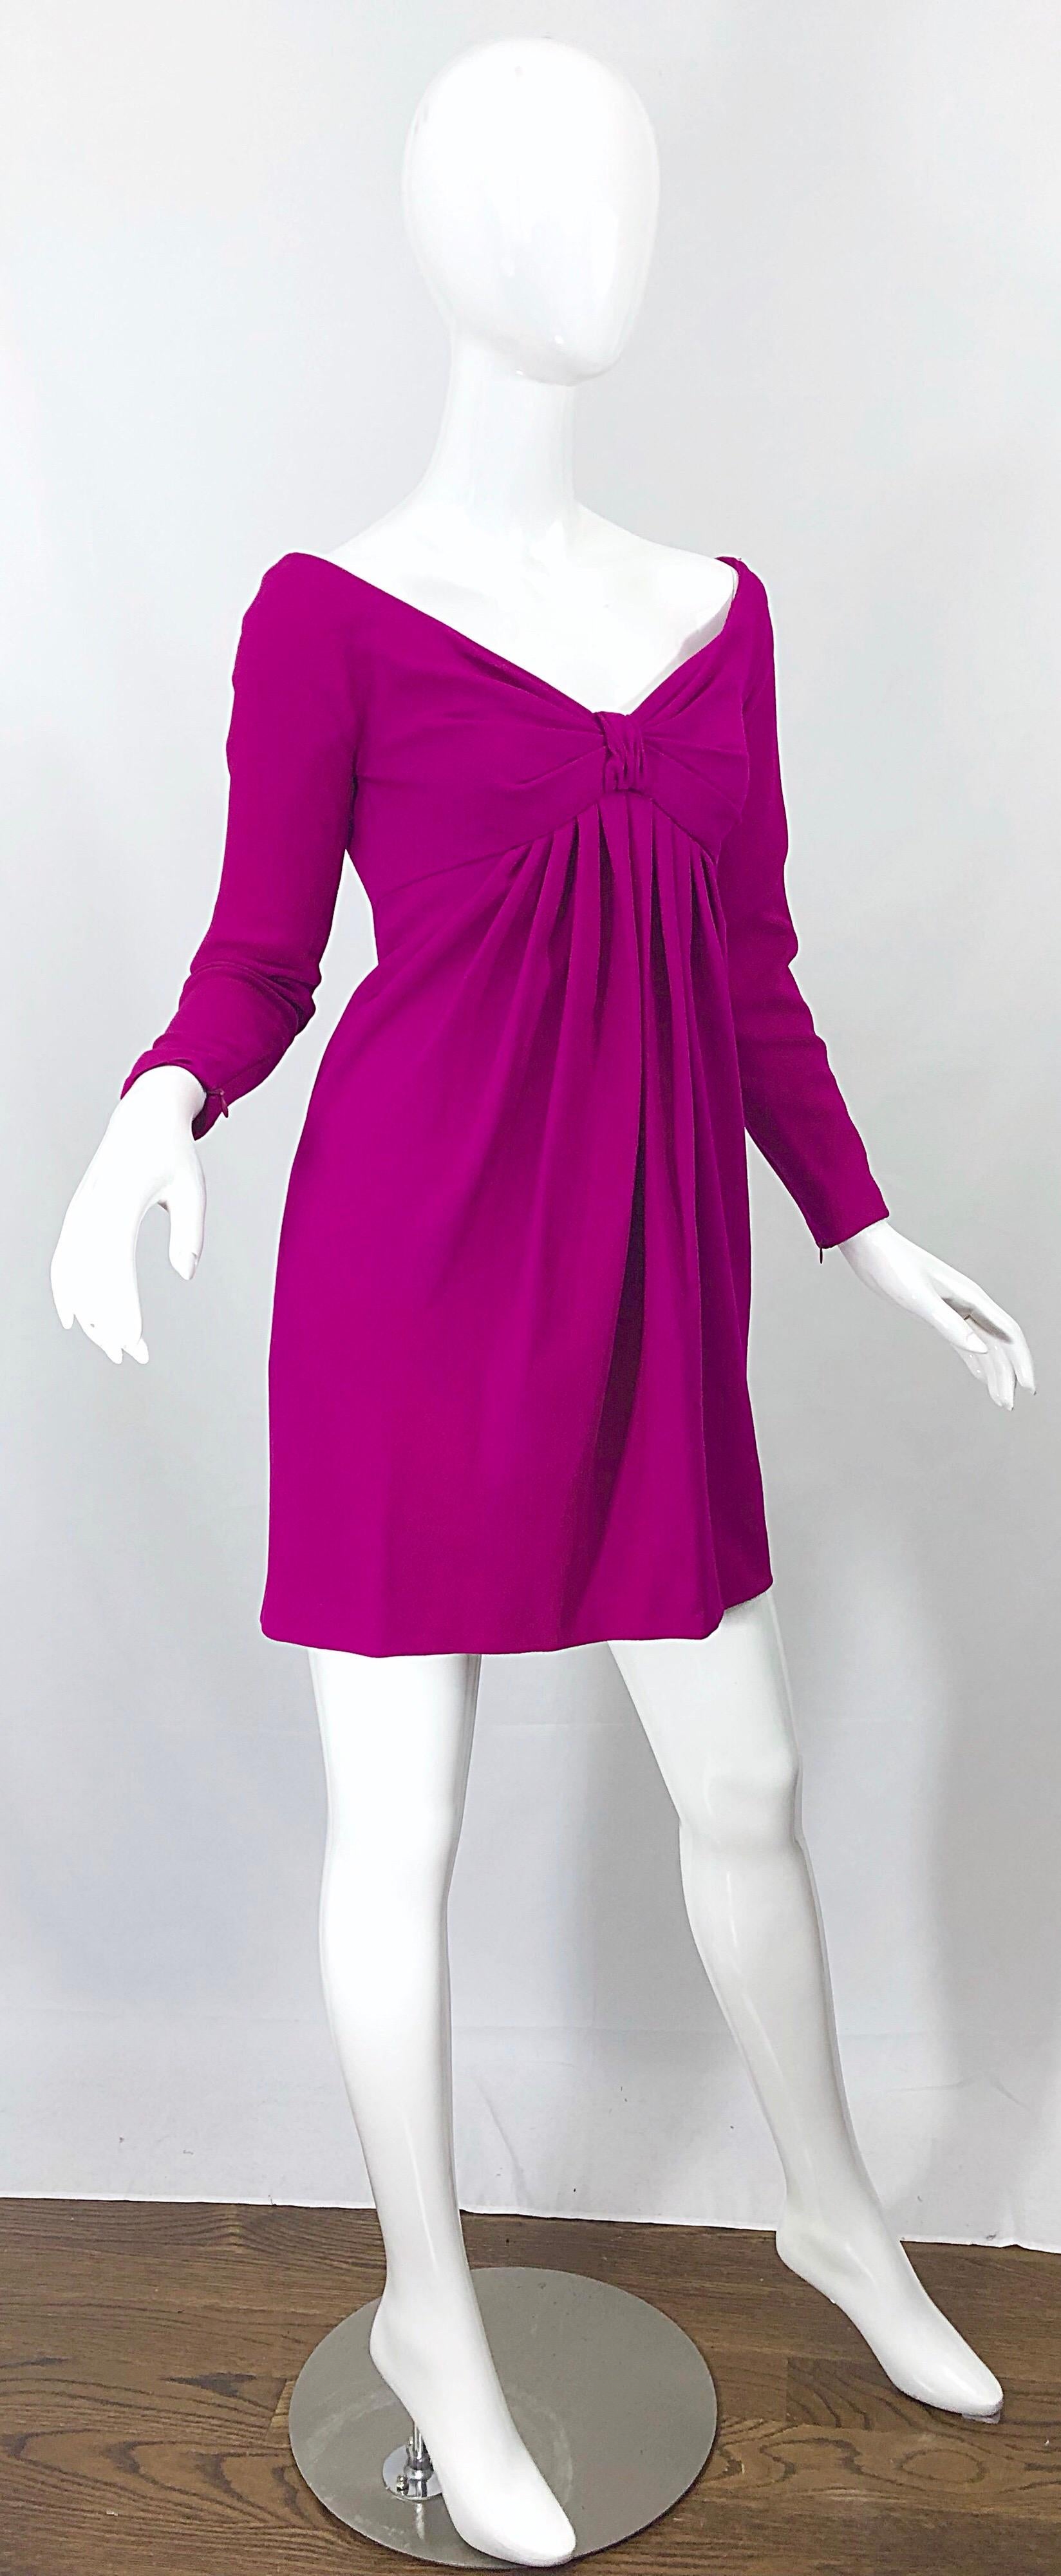 Carolyne Roehm 1990s Fuchsia Hot Pink Wool Vintage 90s Mini Empire Dress For Sale 5